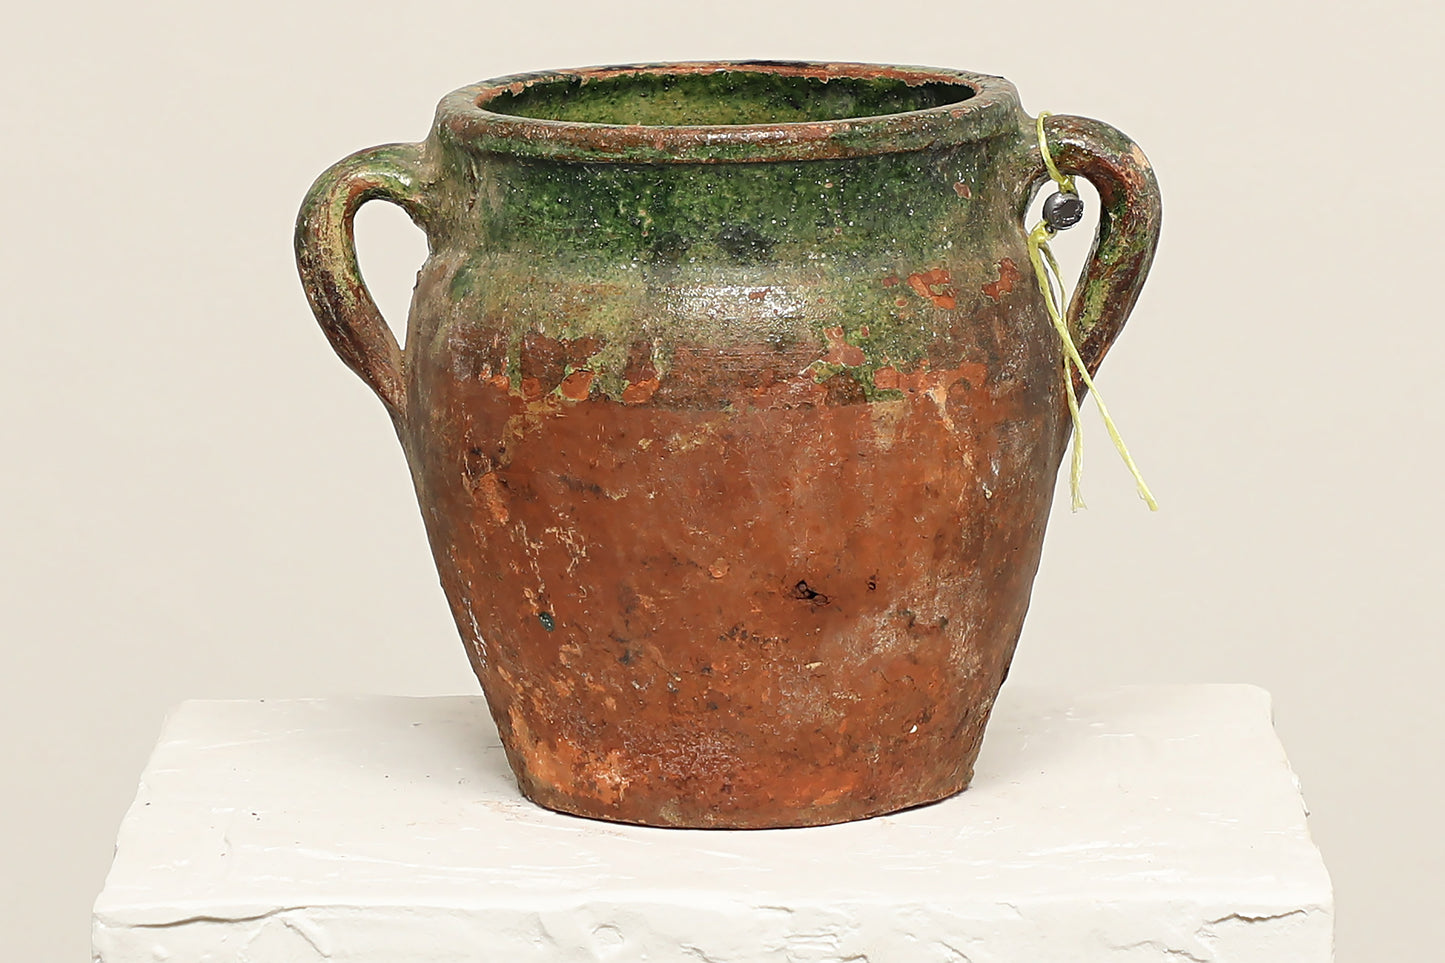 (IWB035) Vintage Turkish Pot (10x10x8)